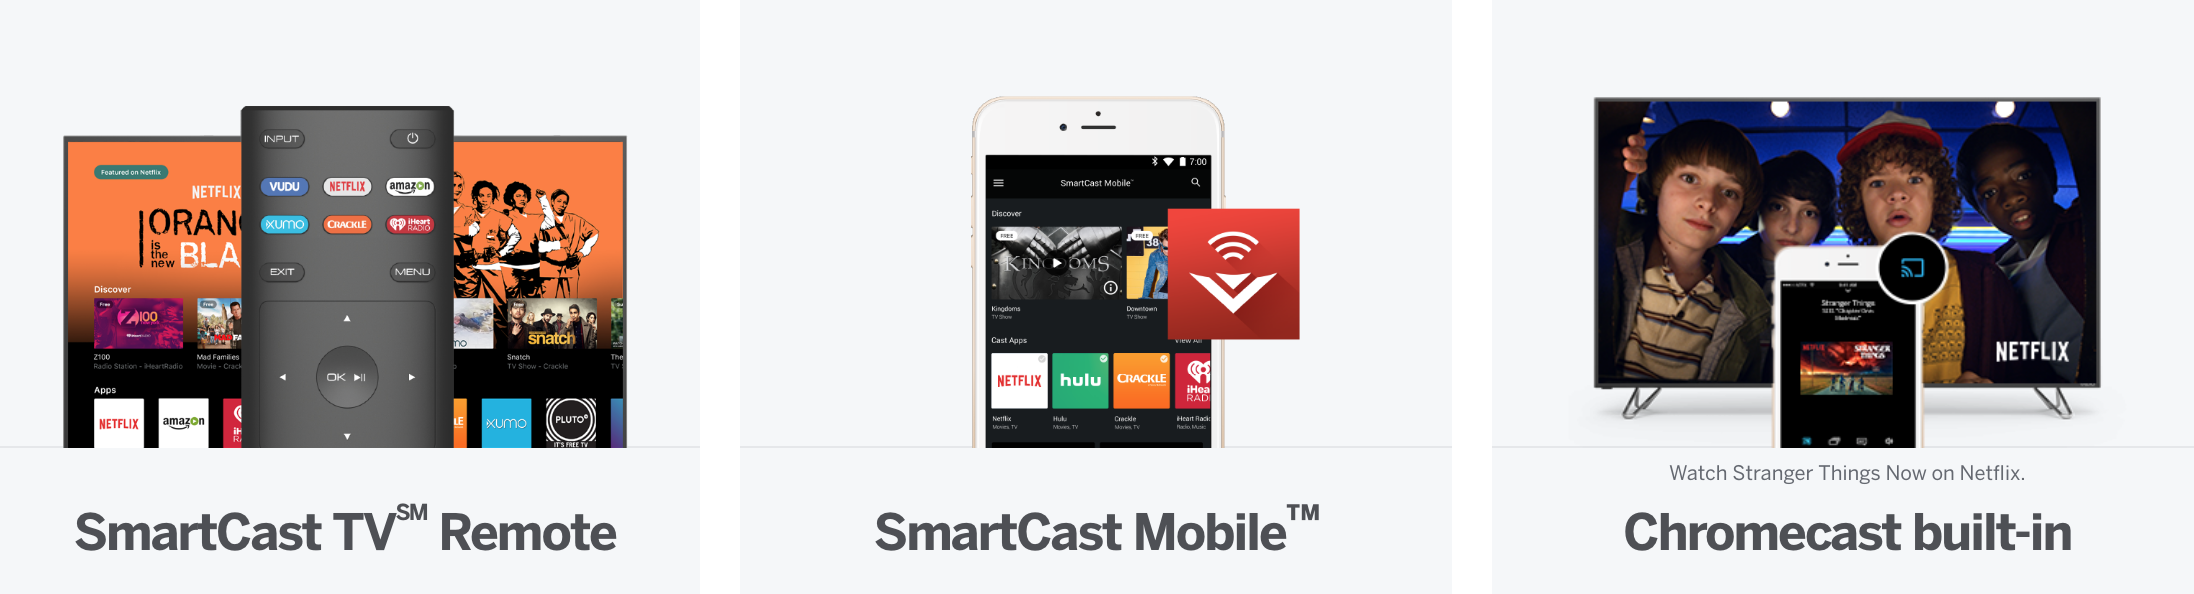 VIZIO announces Alexa Skill for its SmartCast TV lineup 9to5Toys